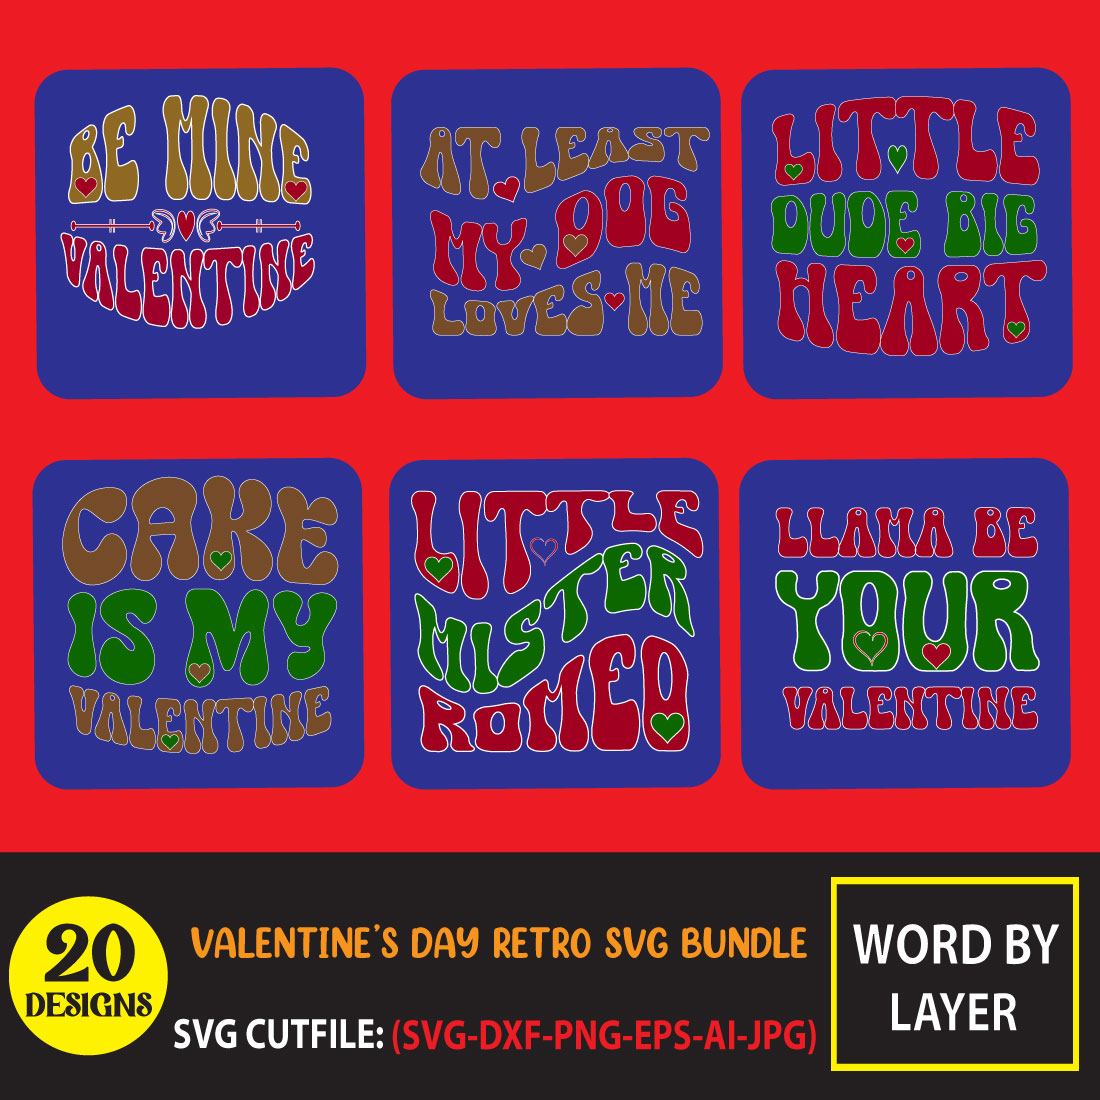 Valentine's Day Retro SVG Bundle main cover.